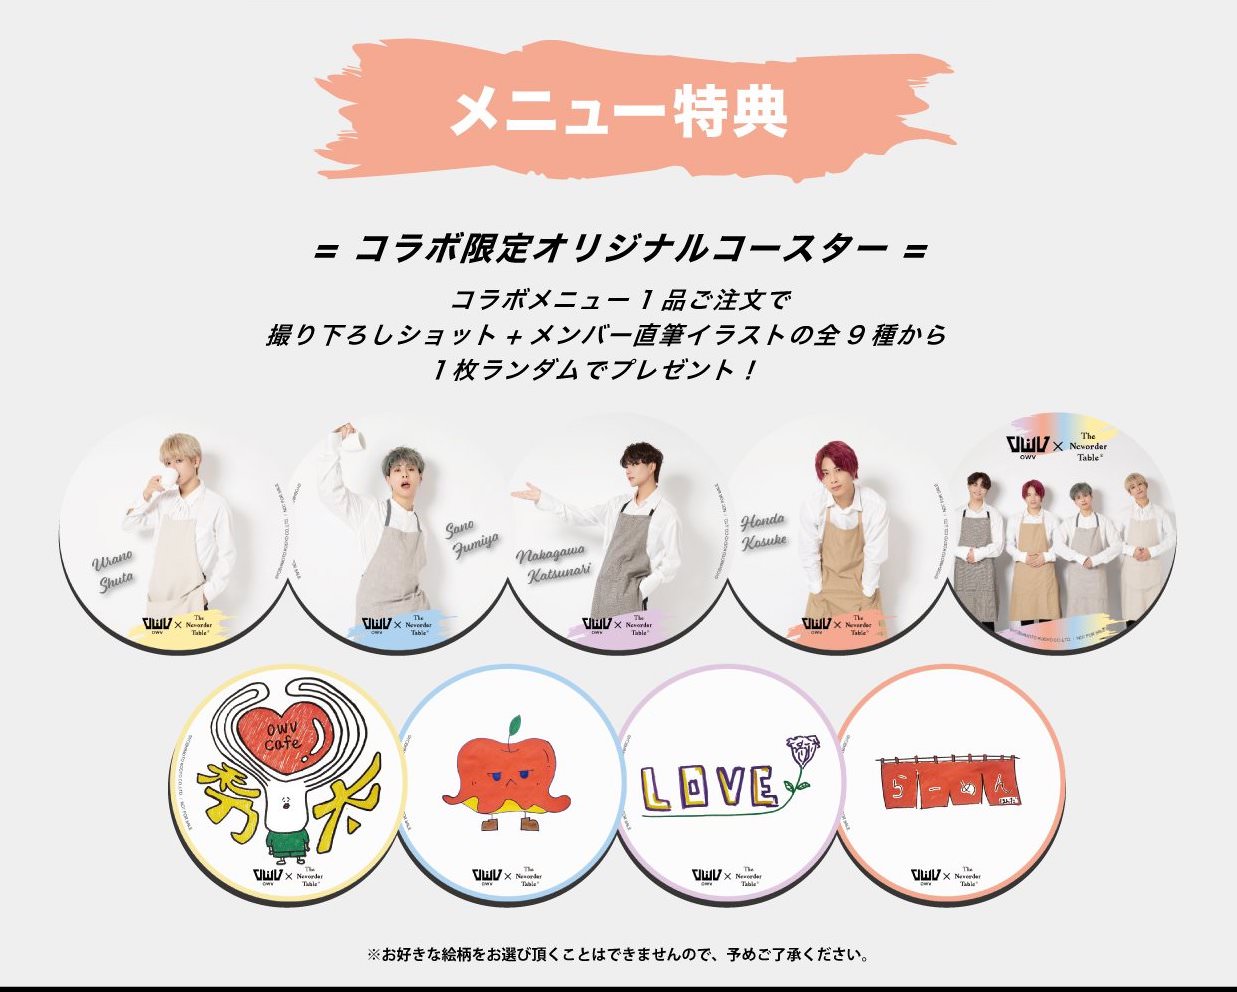 OWV (オウブ) × The Neworder Table渋谷 3.24-4.18 コラボカフェ開催!!